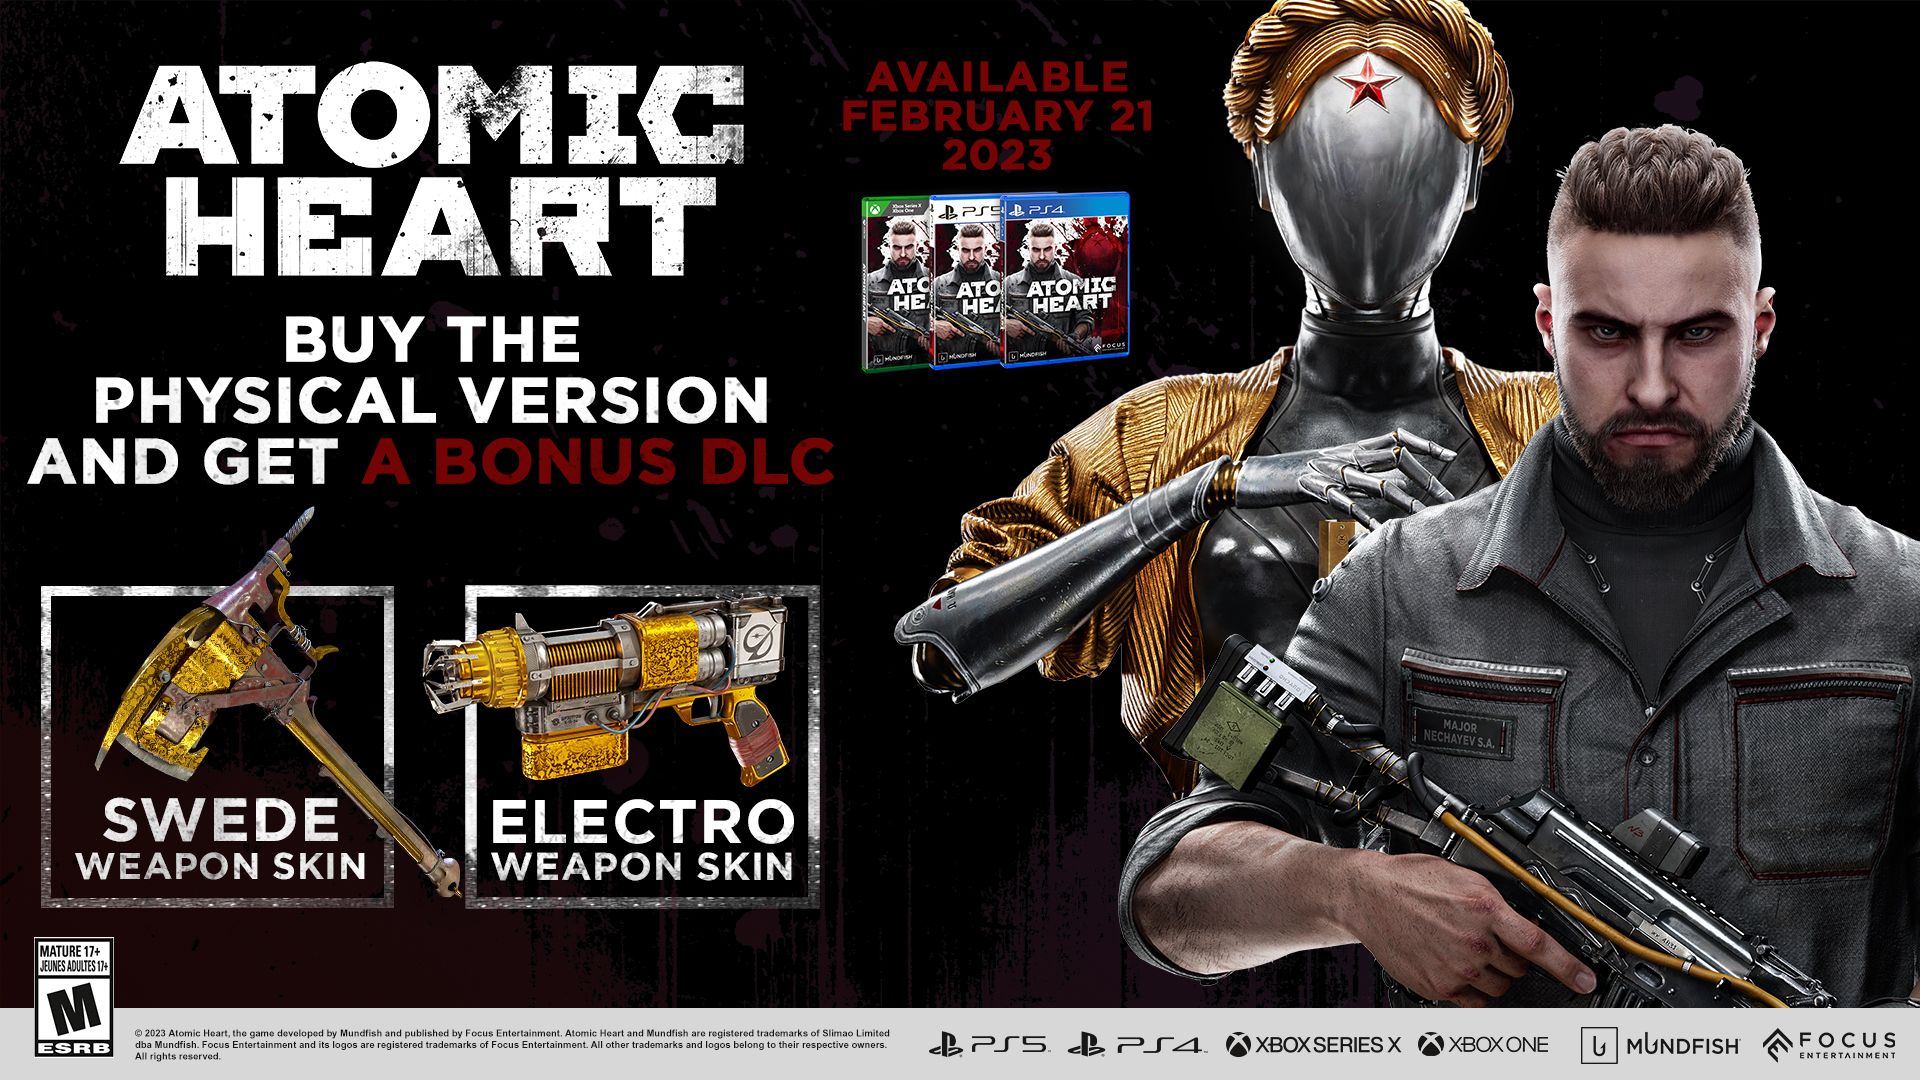 New Atomic Heart DLC means huge flash sale